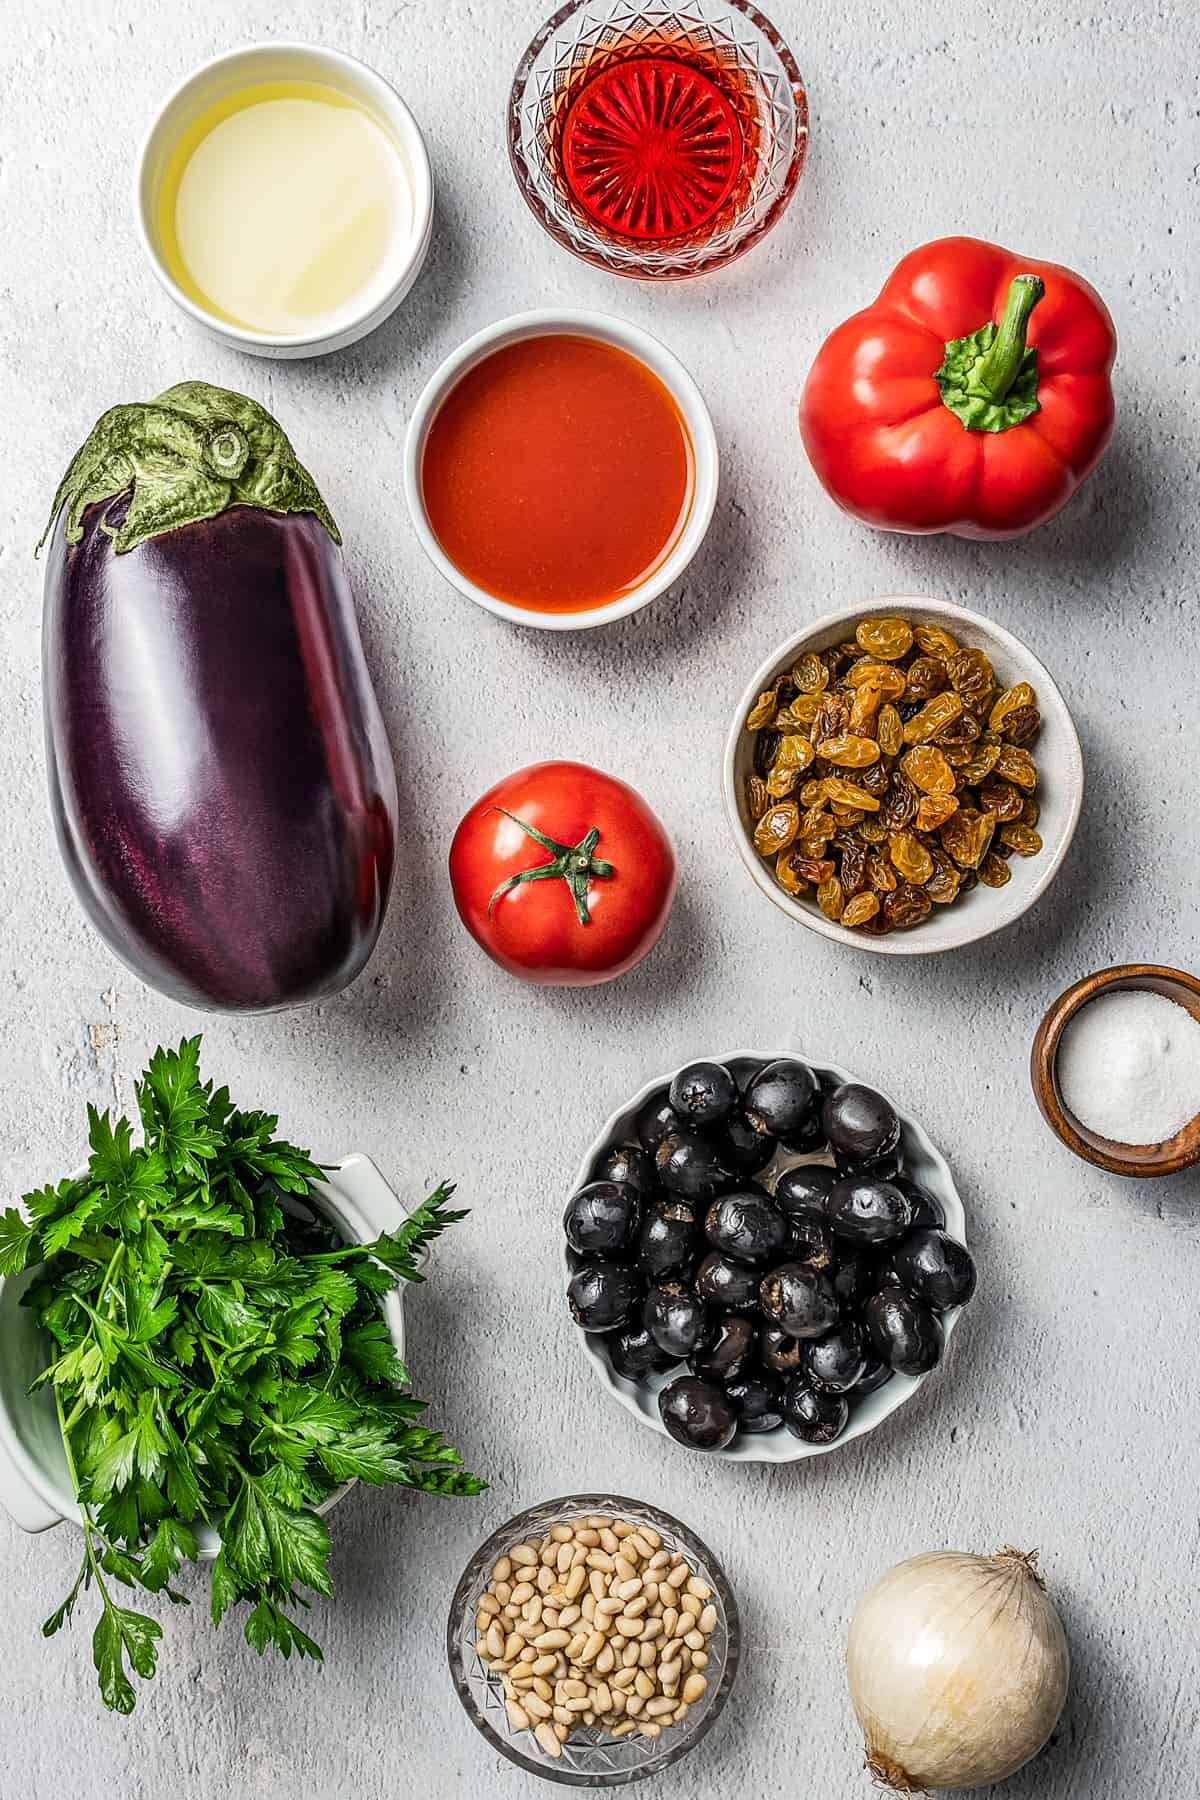 From top left: Olive oil, red wine vinegar, red bell pepper, eggplant, tomato sauce, fresh tomato, golden raisins, fresh parsley, black olives, salt, pine nuts, onion.